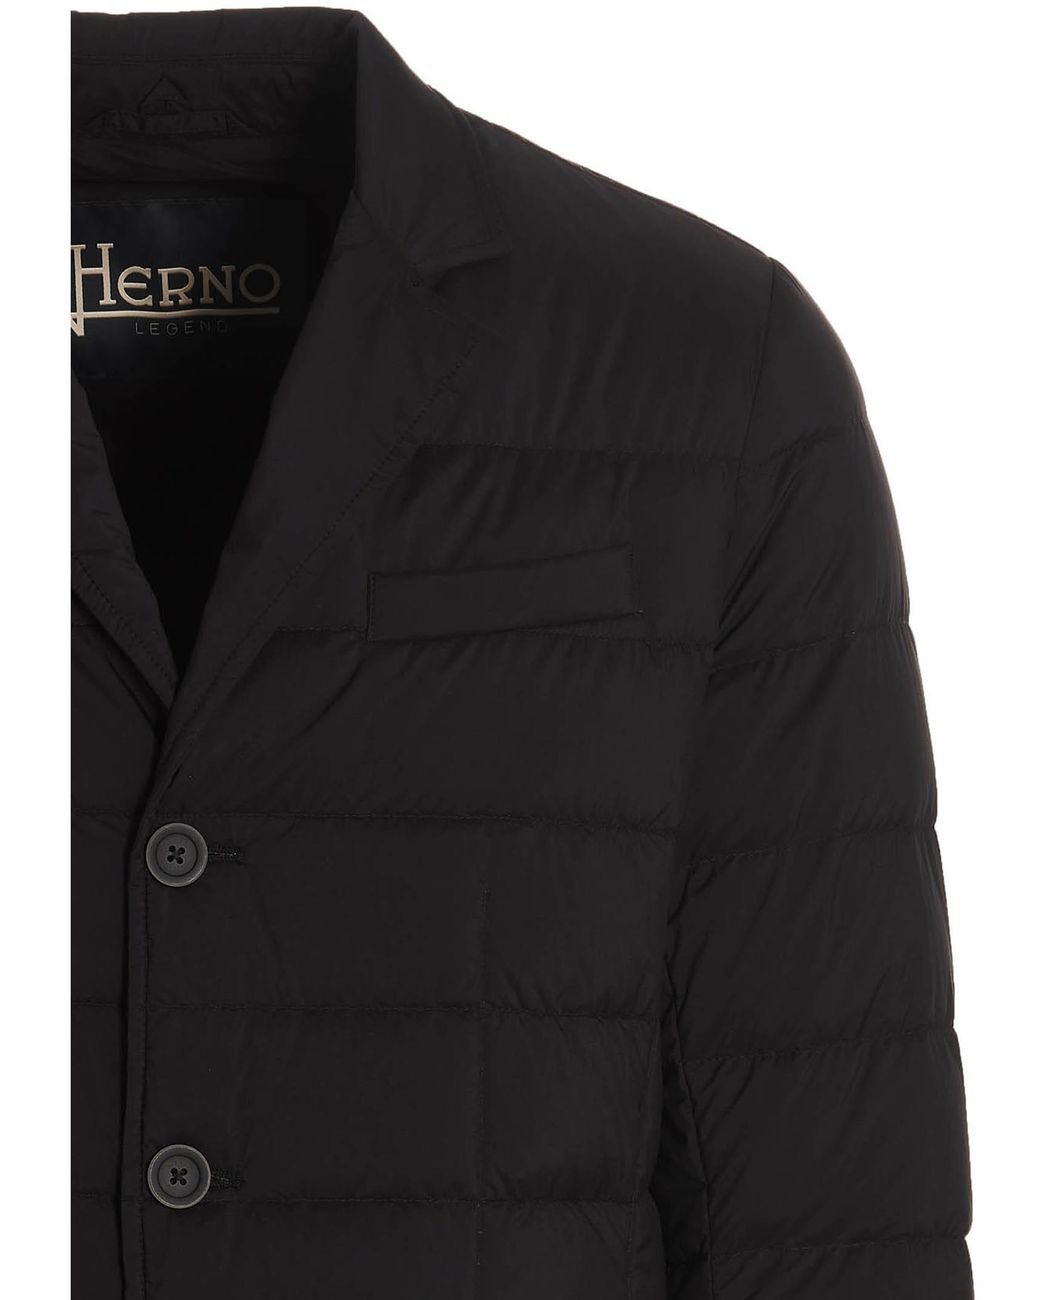 Herno La Giacca Blazer Jacket in Black for Men | Lyst